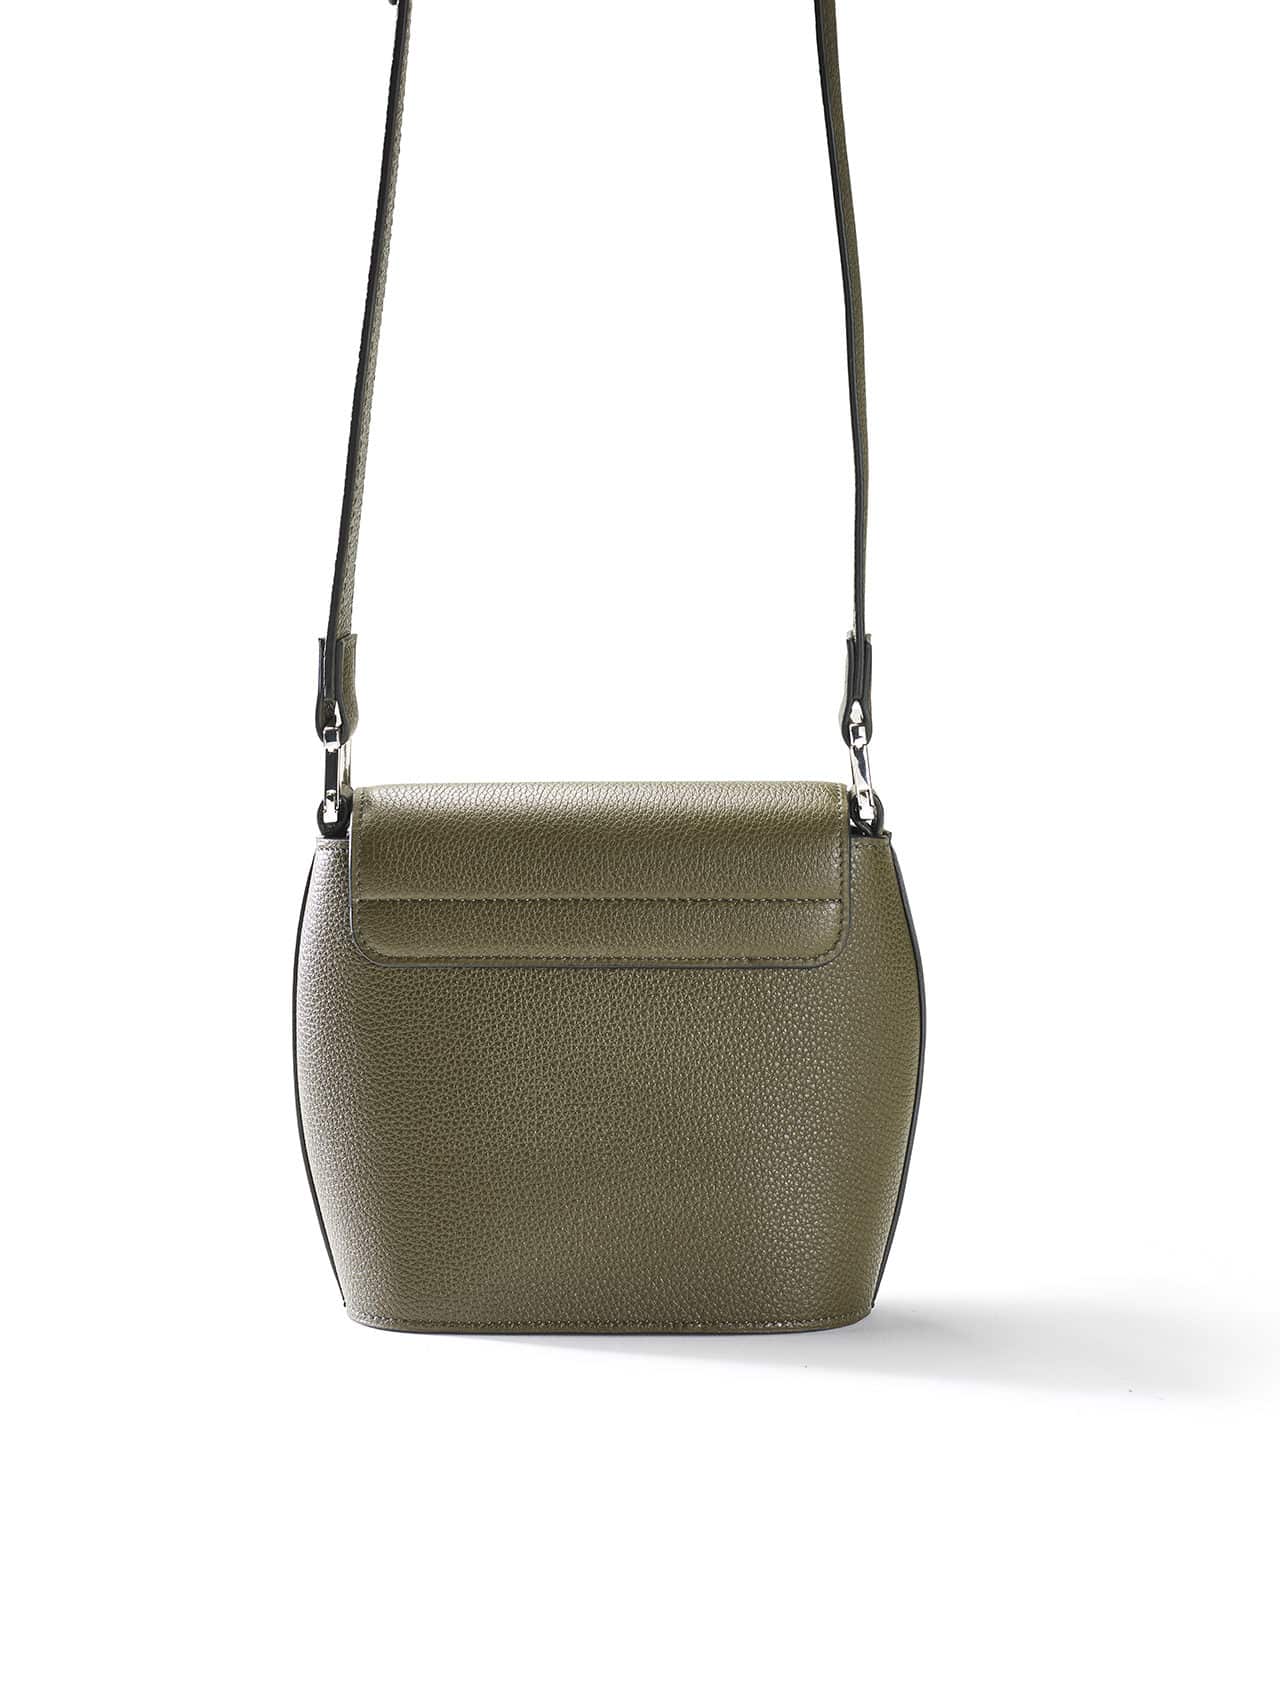 handbag leather green